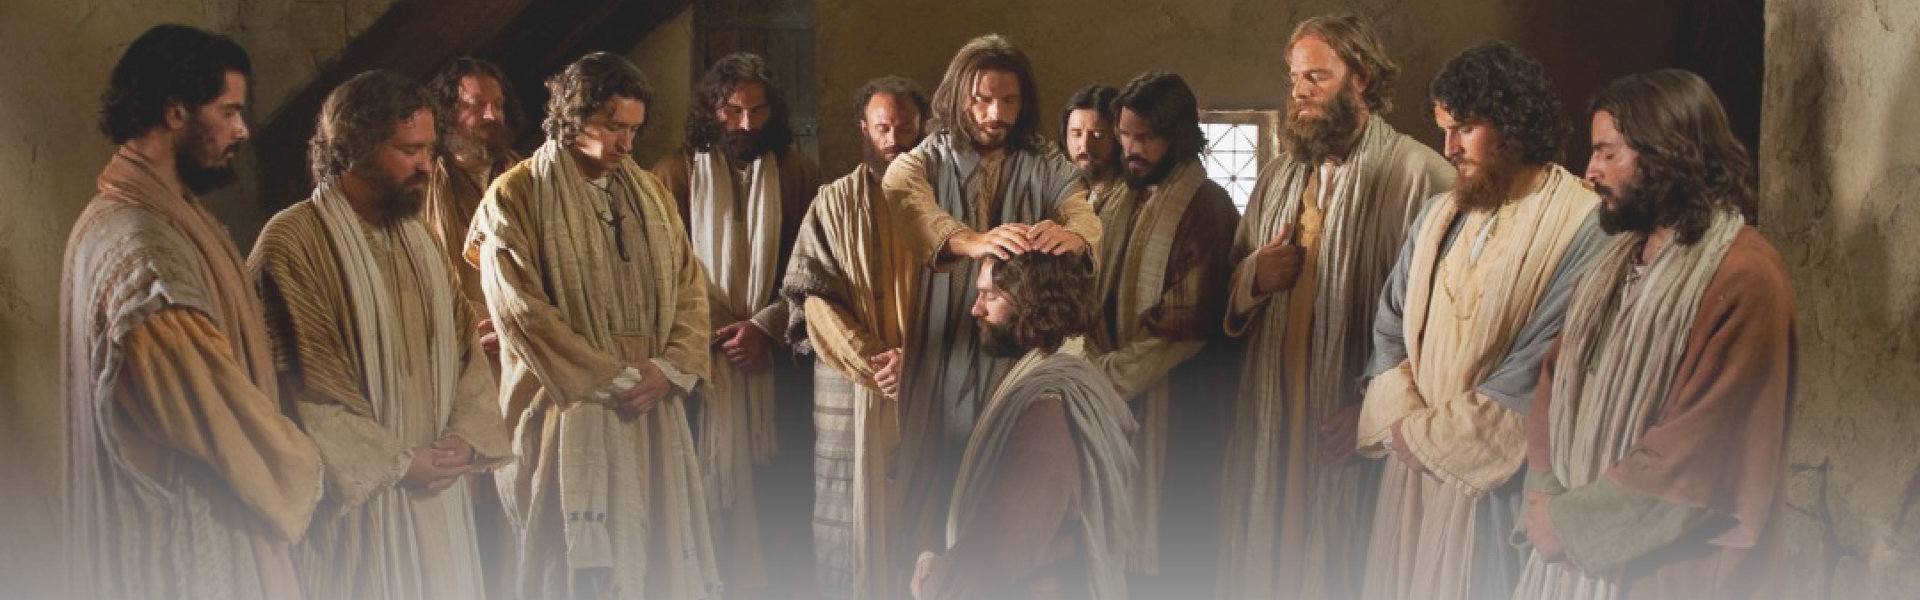 portrait of Jesus Christ with his apostles